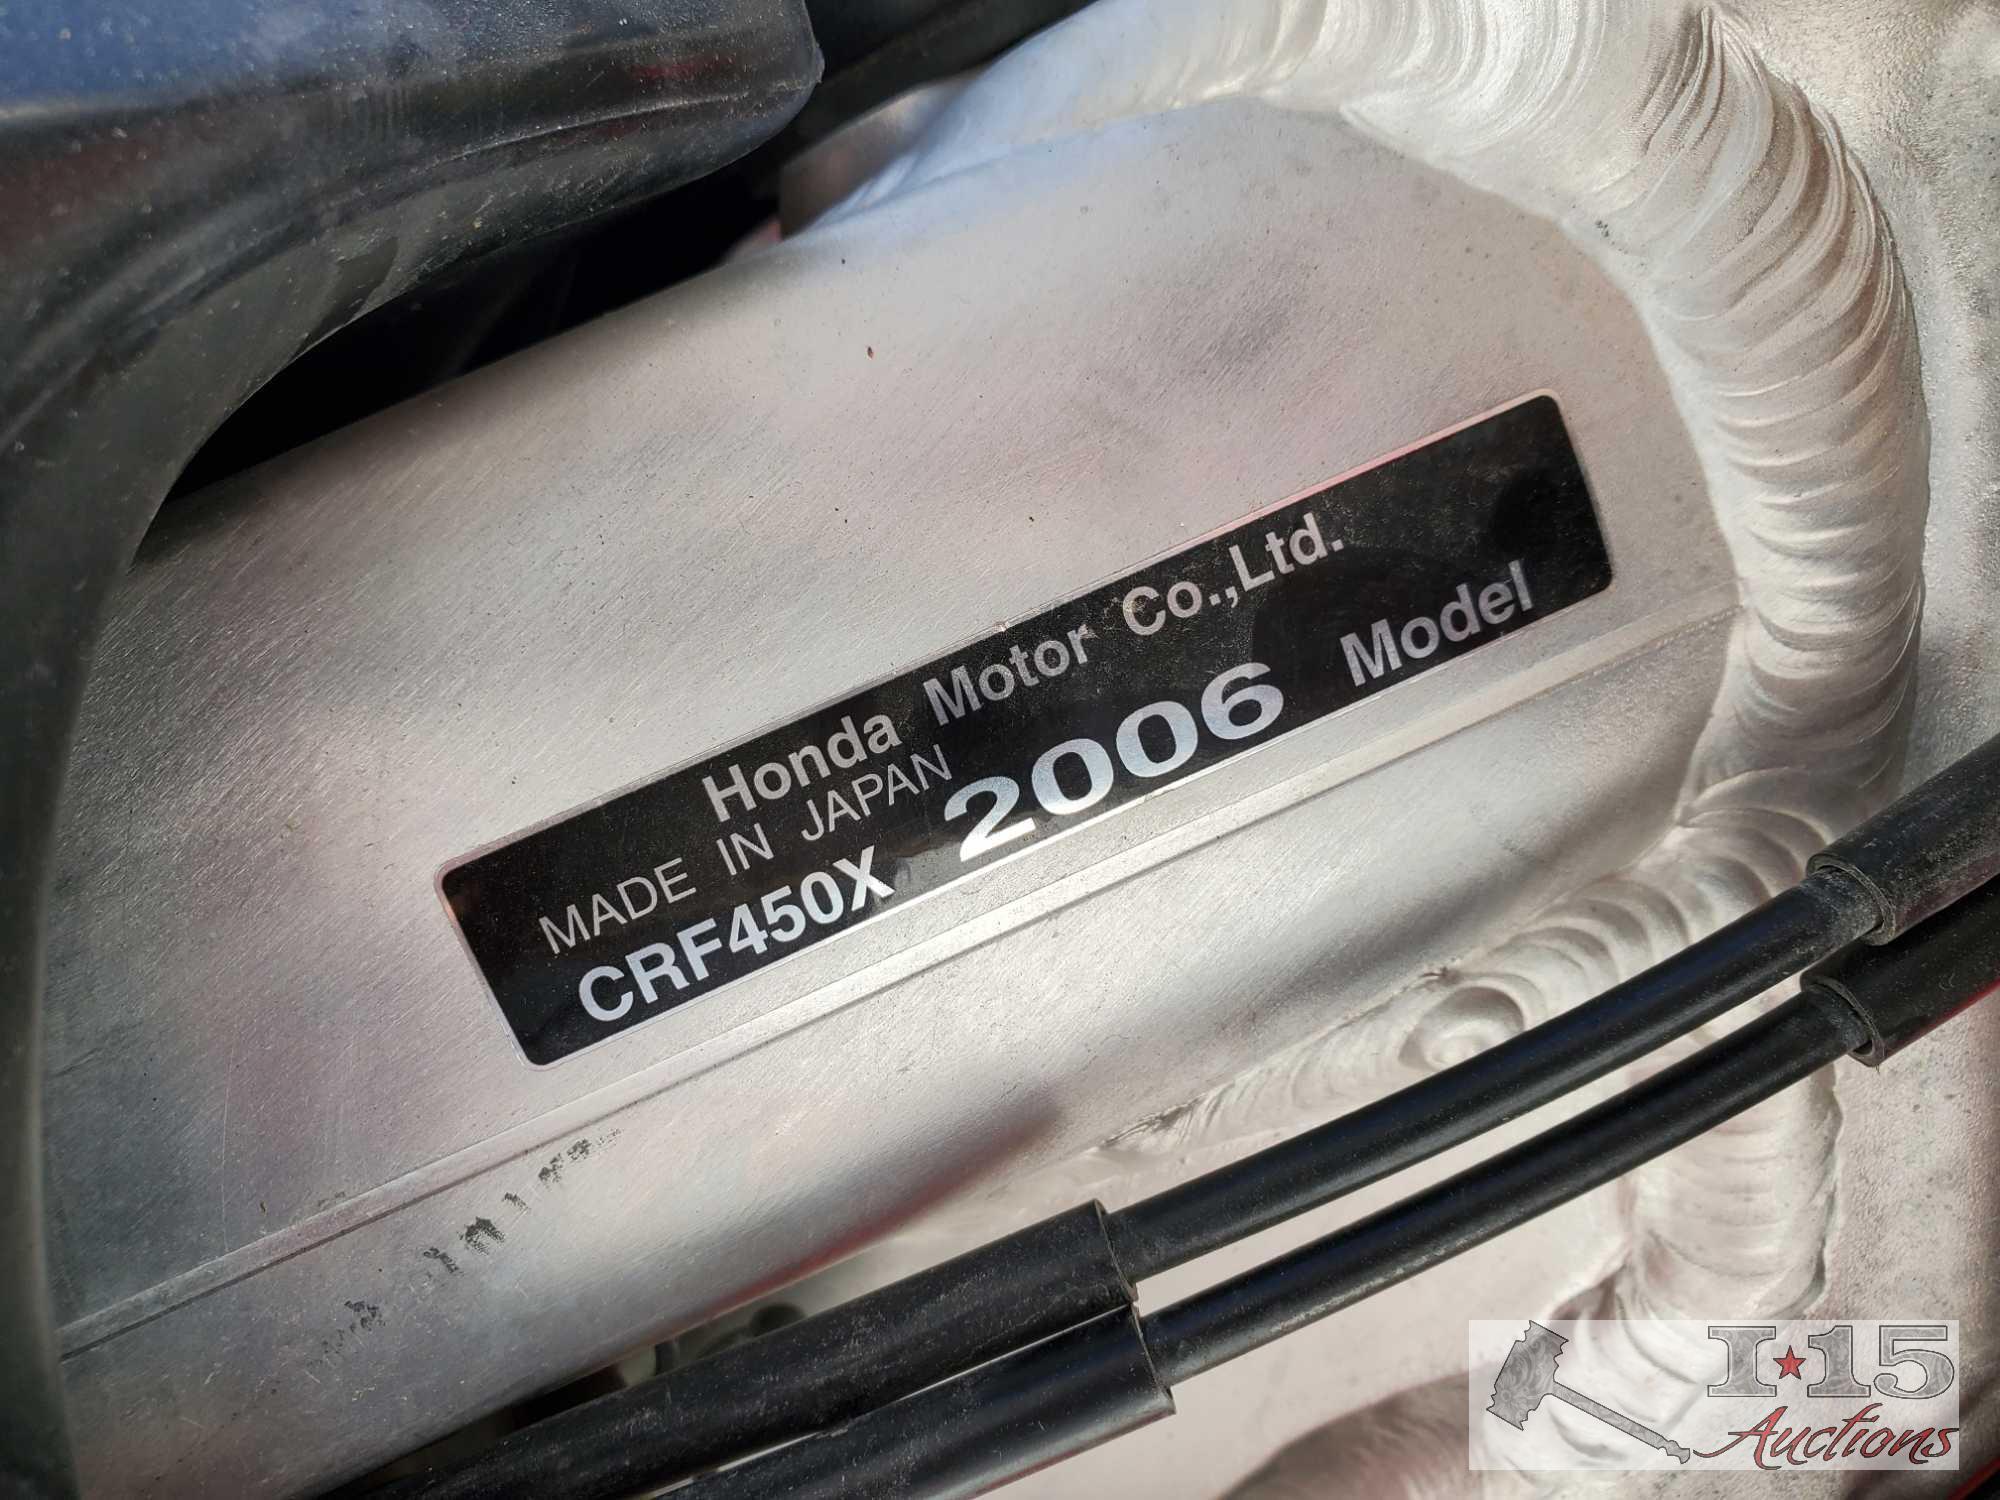 2006 Honda CRF 450X, Street Legal, More Info Coming Soon